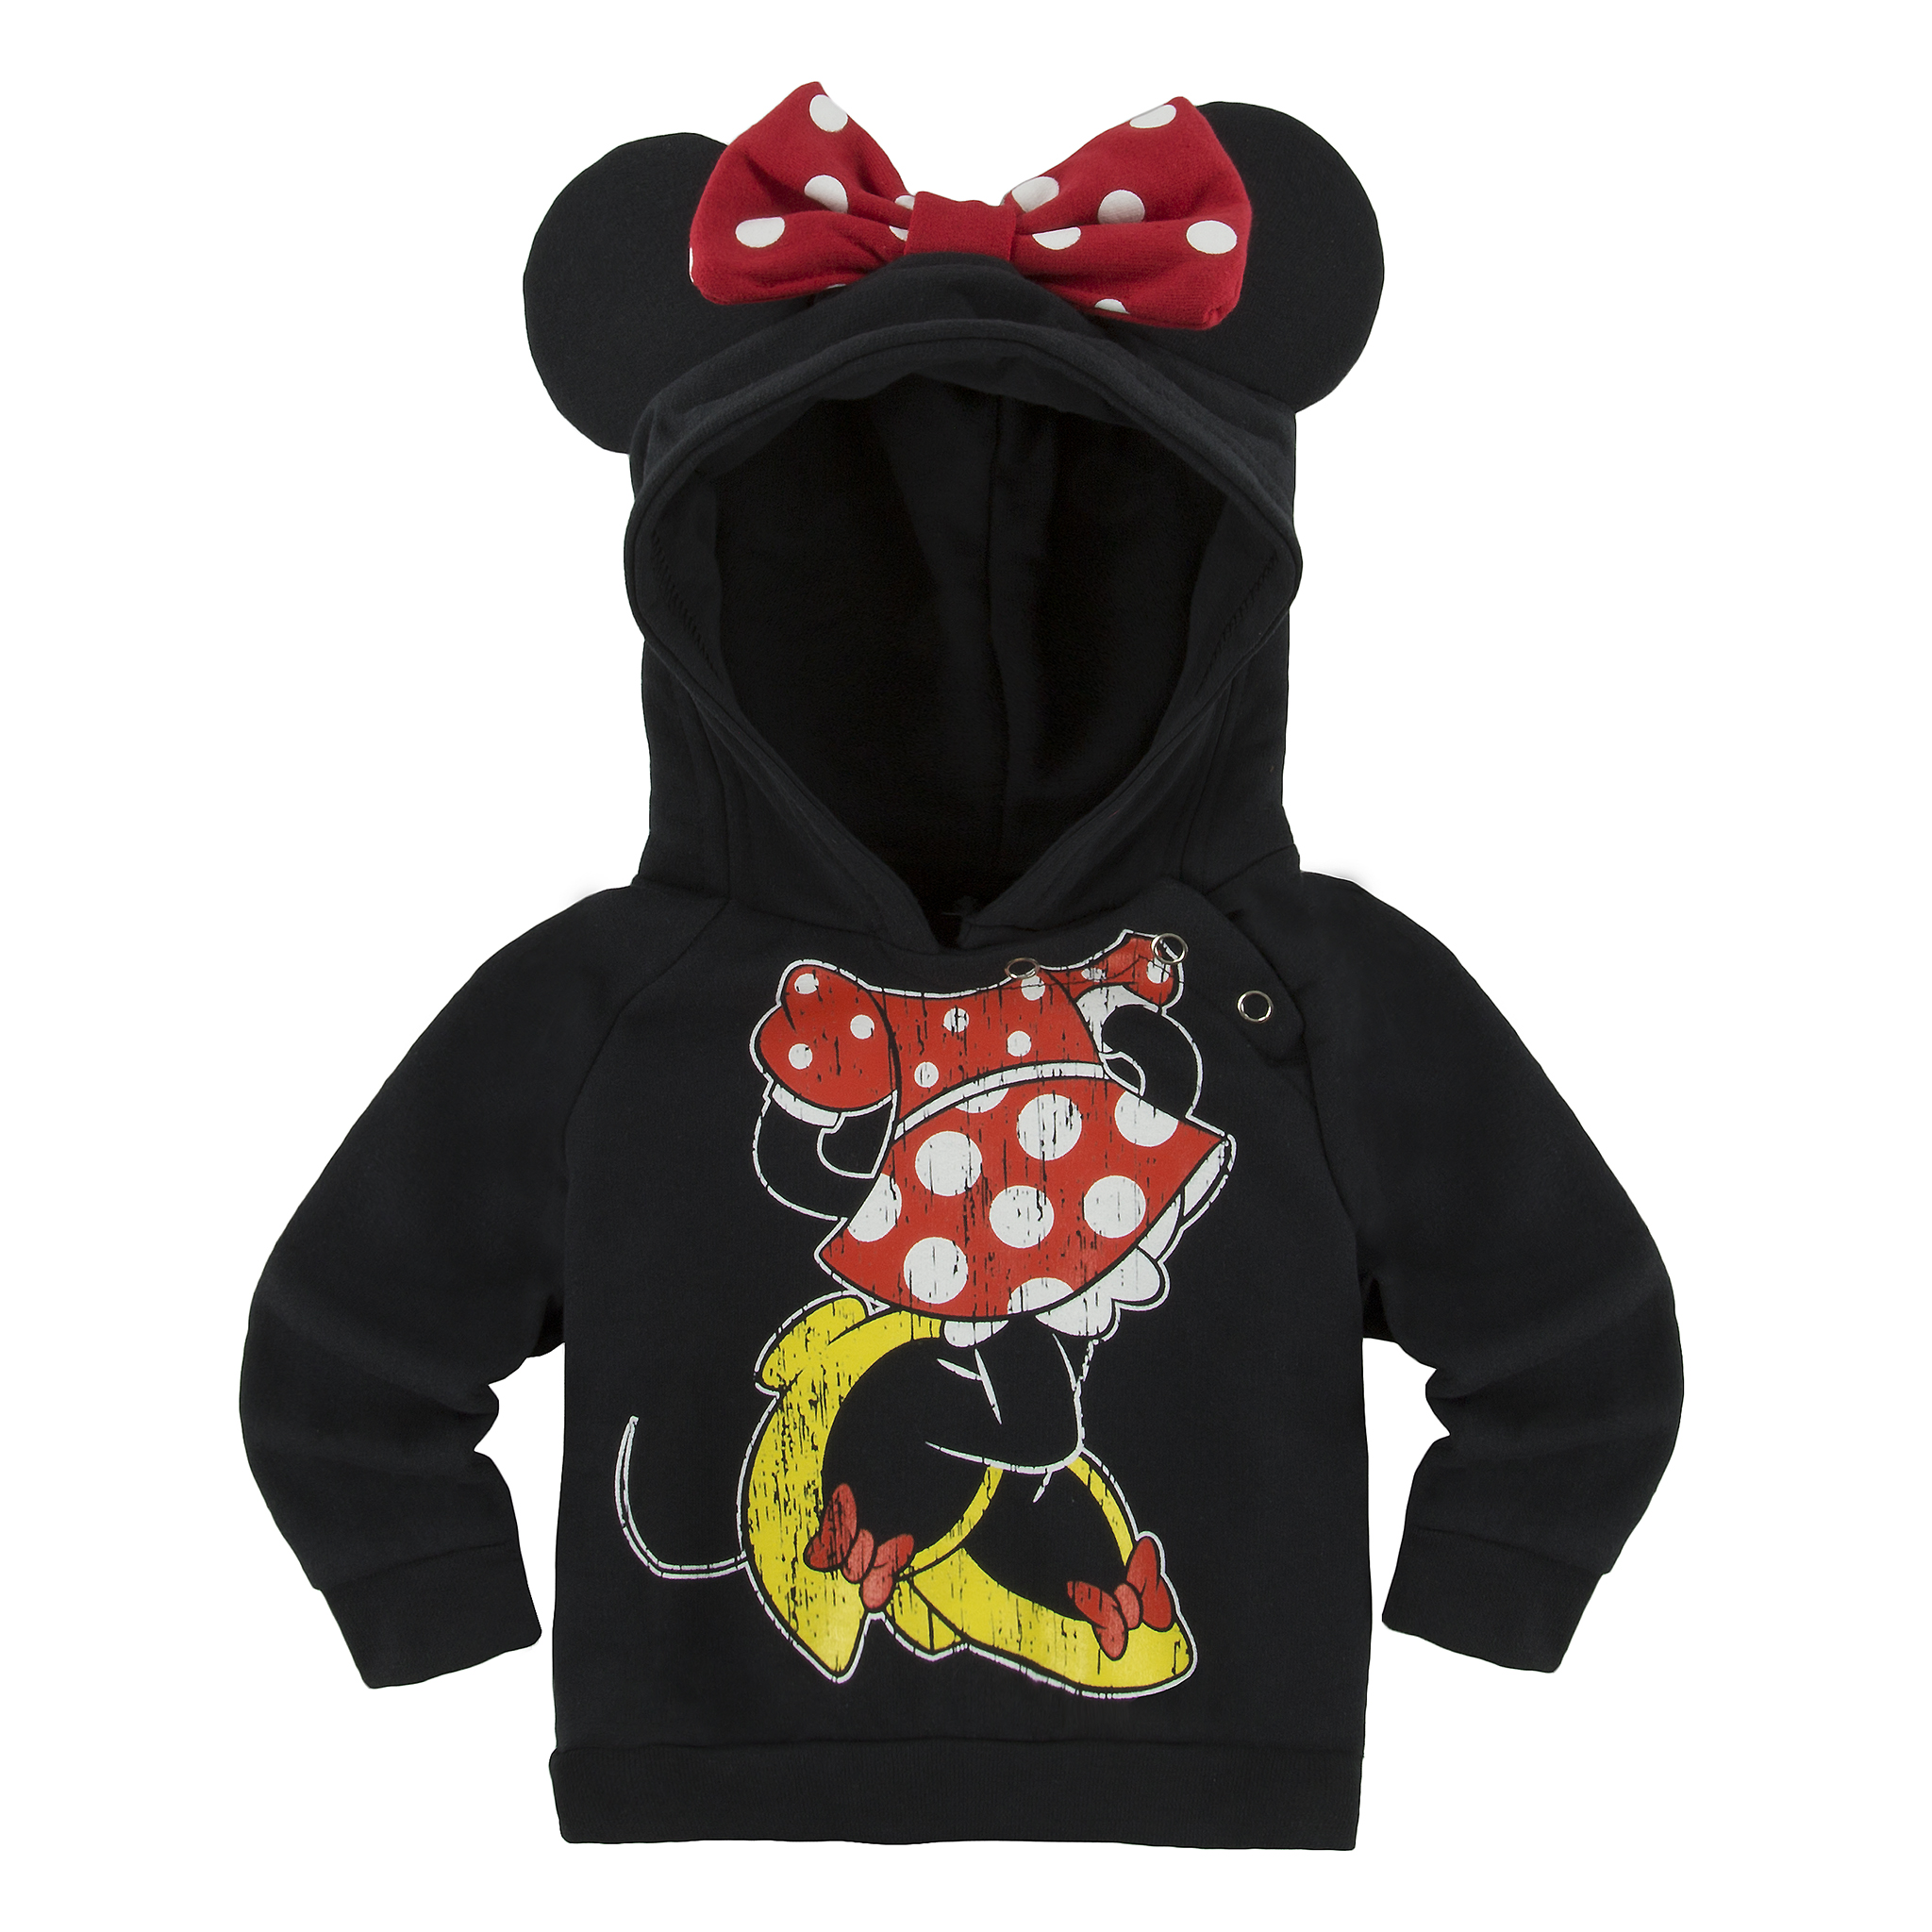 Sudadera con capucha de Minnie Mouse retirada del mercado